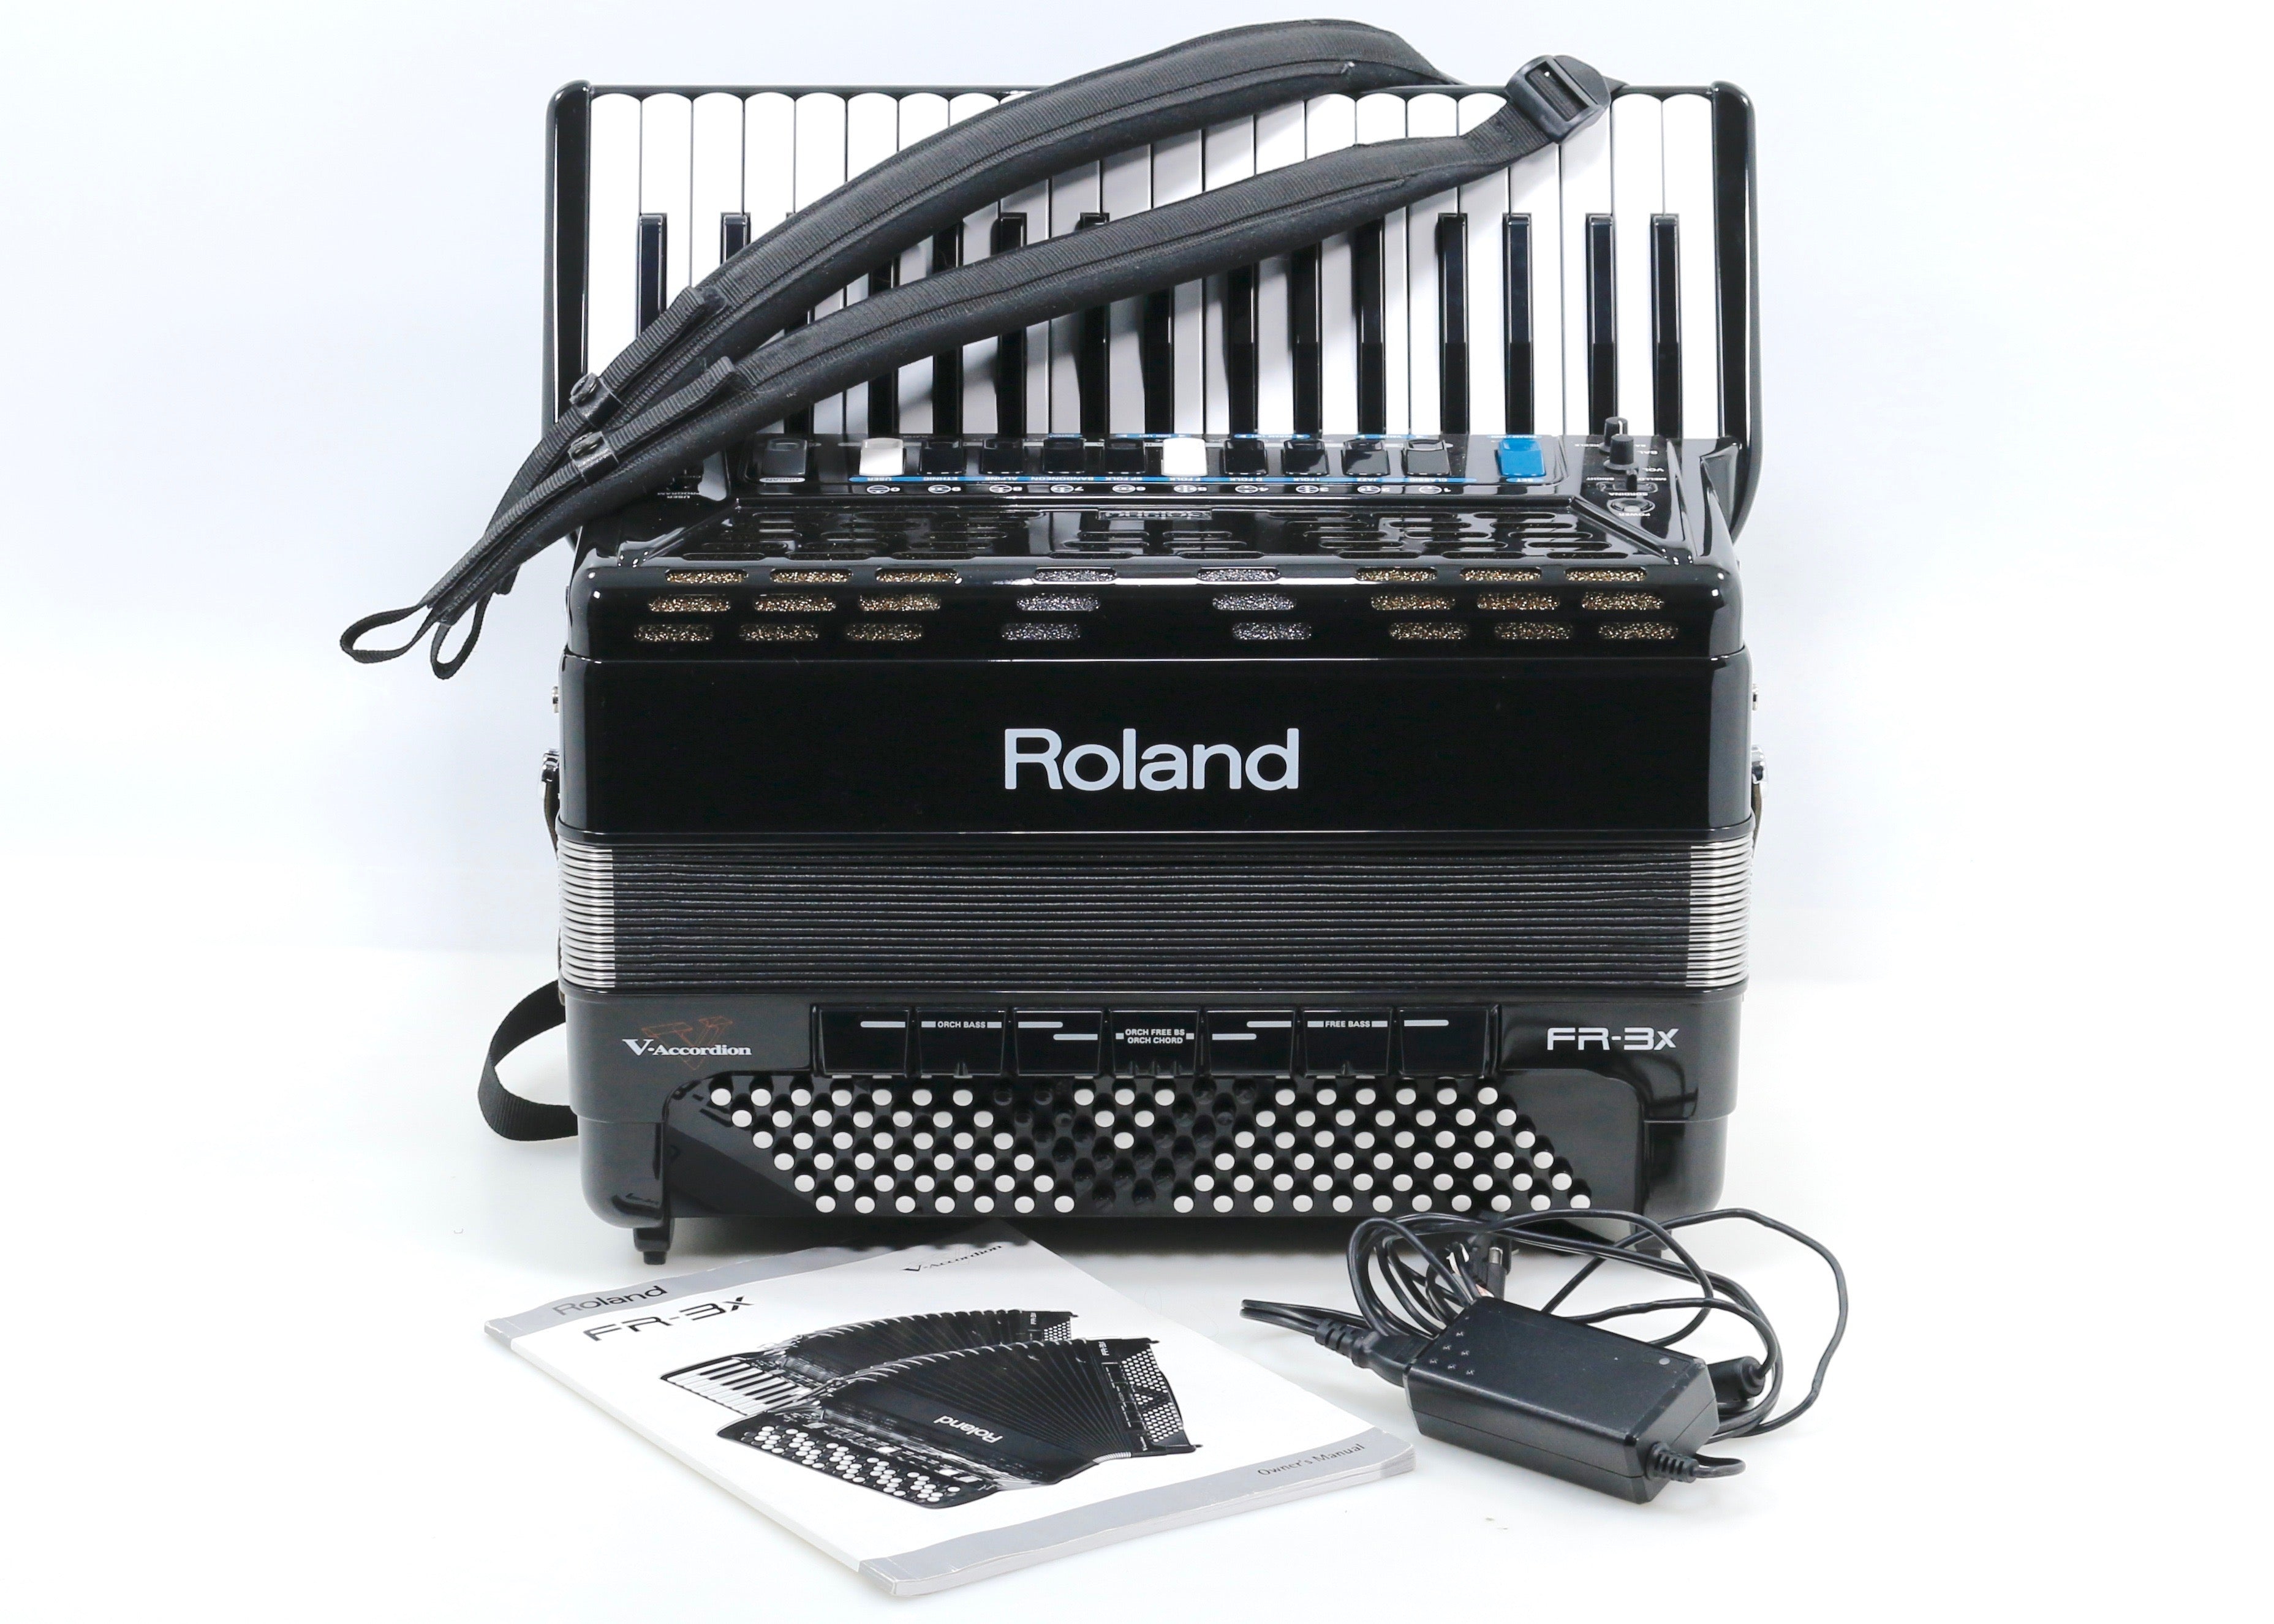 Acordeón digital Roland FR-3x 37/120